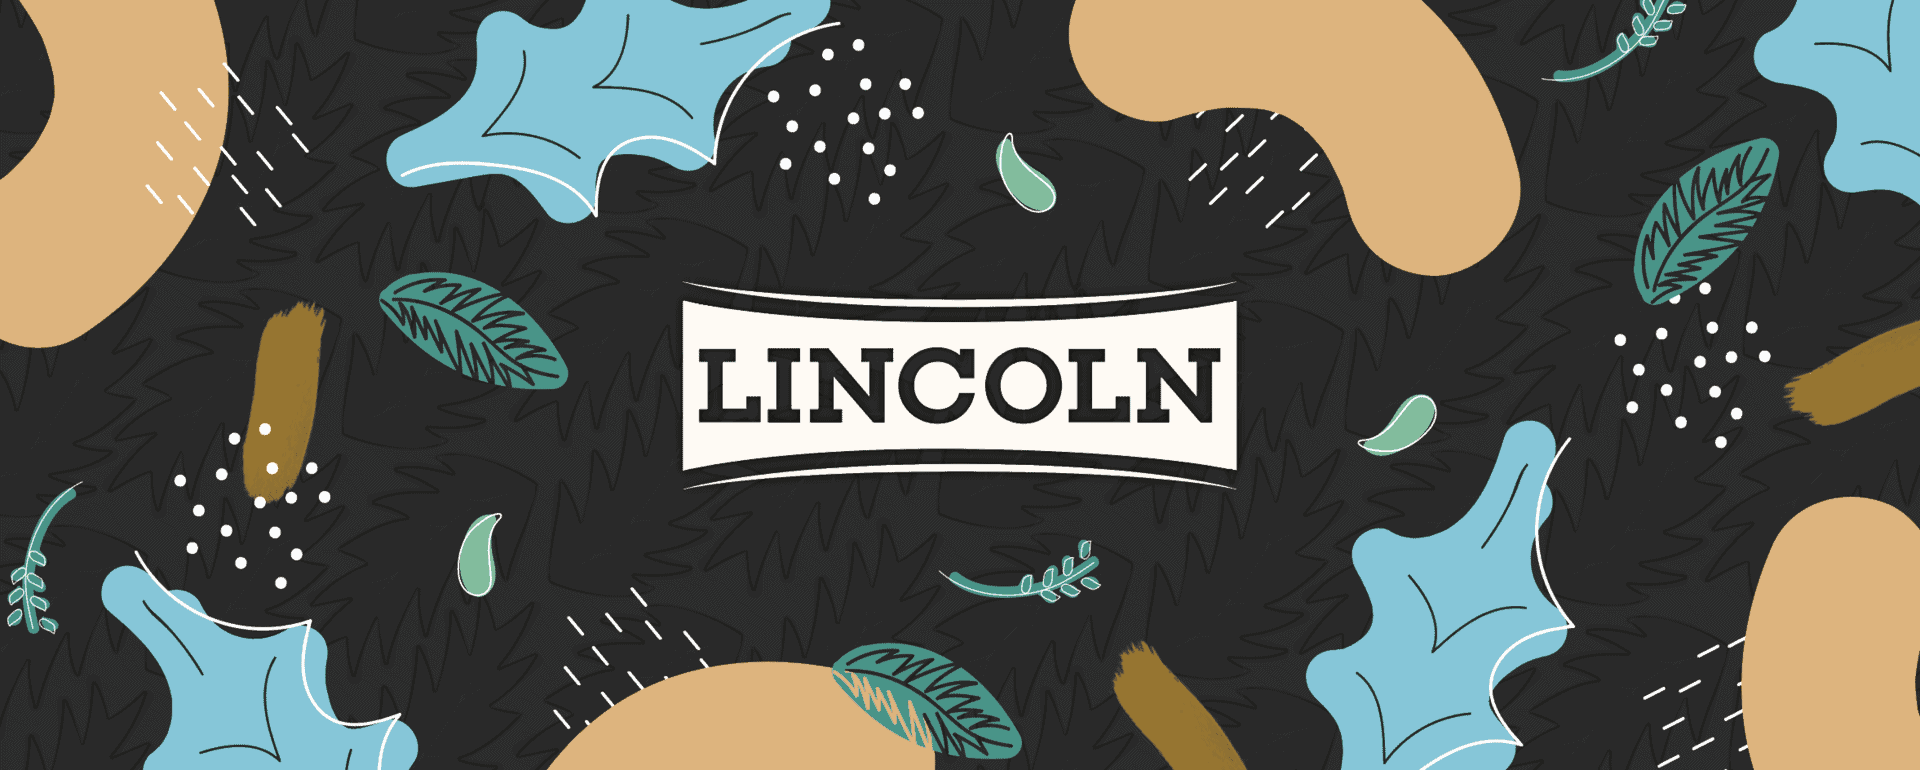 Lincoln | Tea packaging